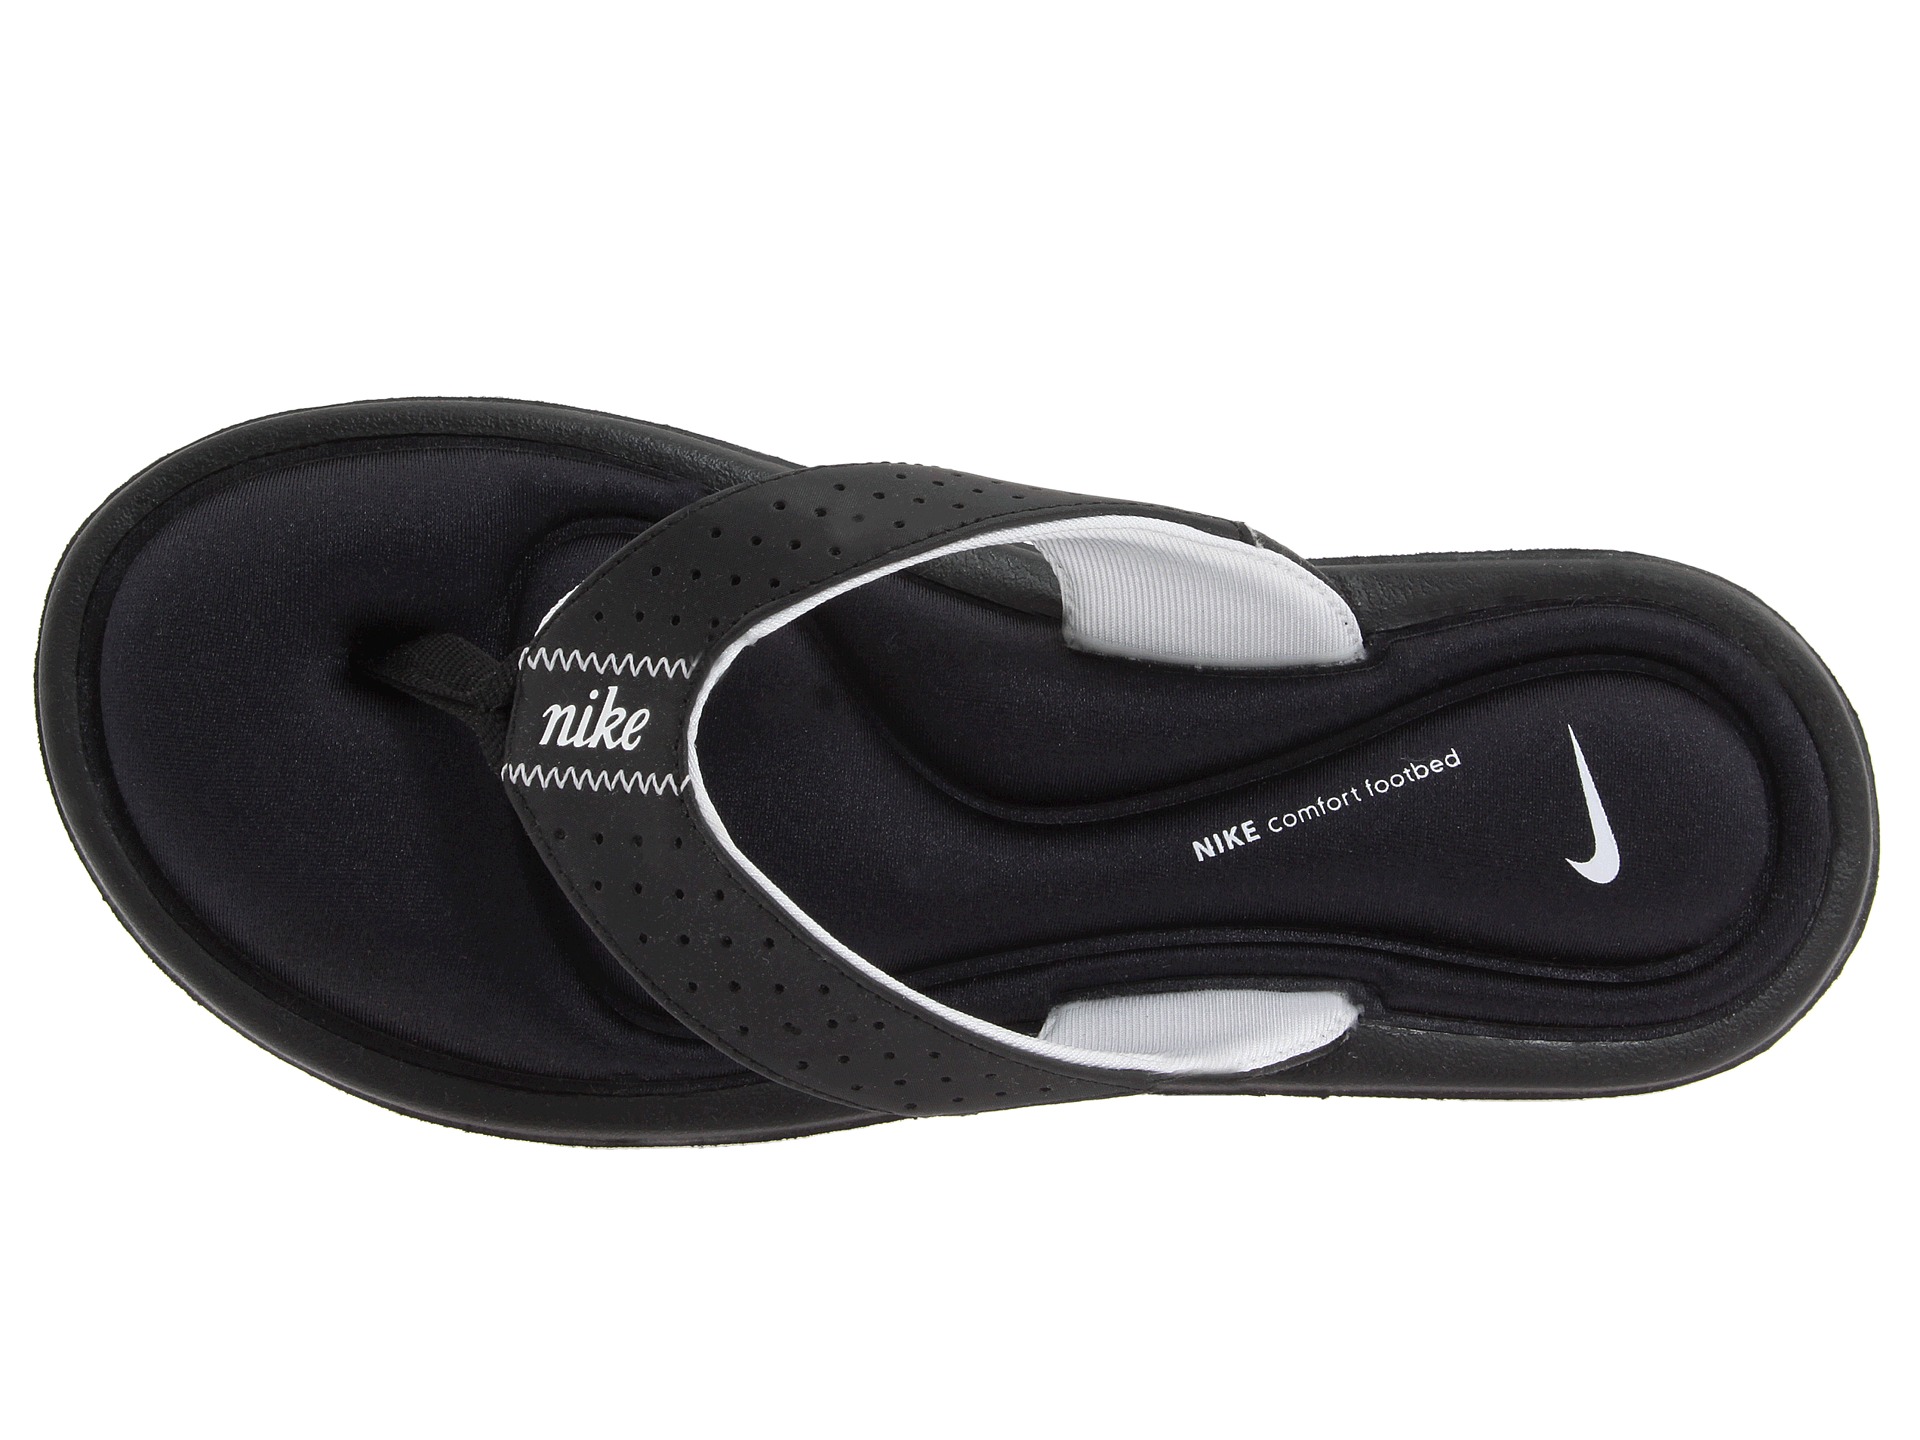 nike comfort footbed women's sandals